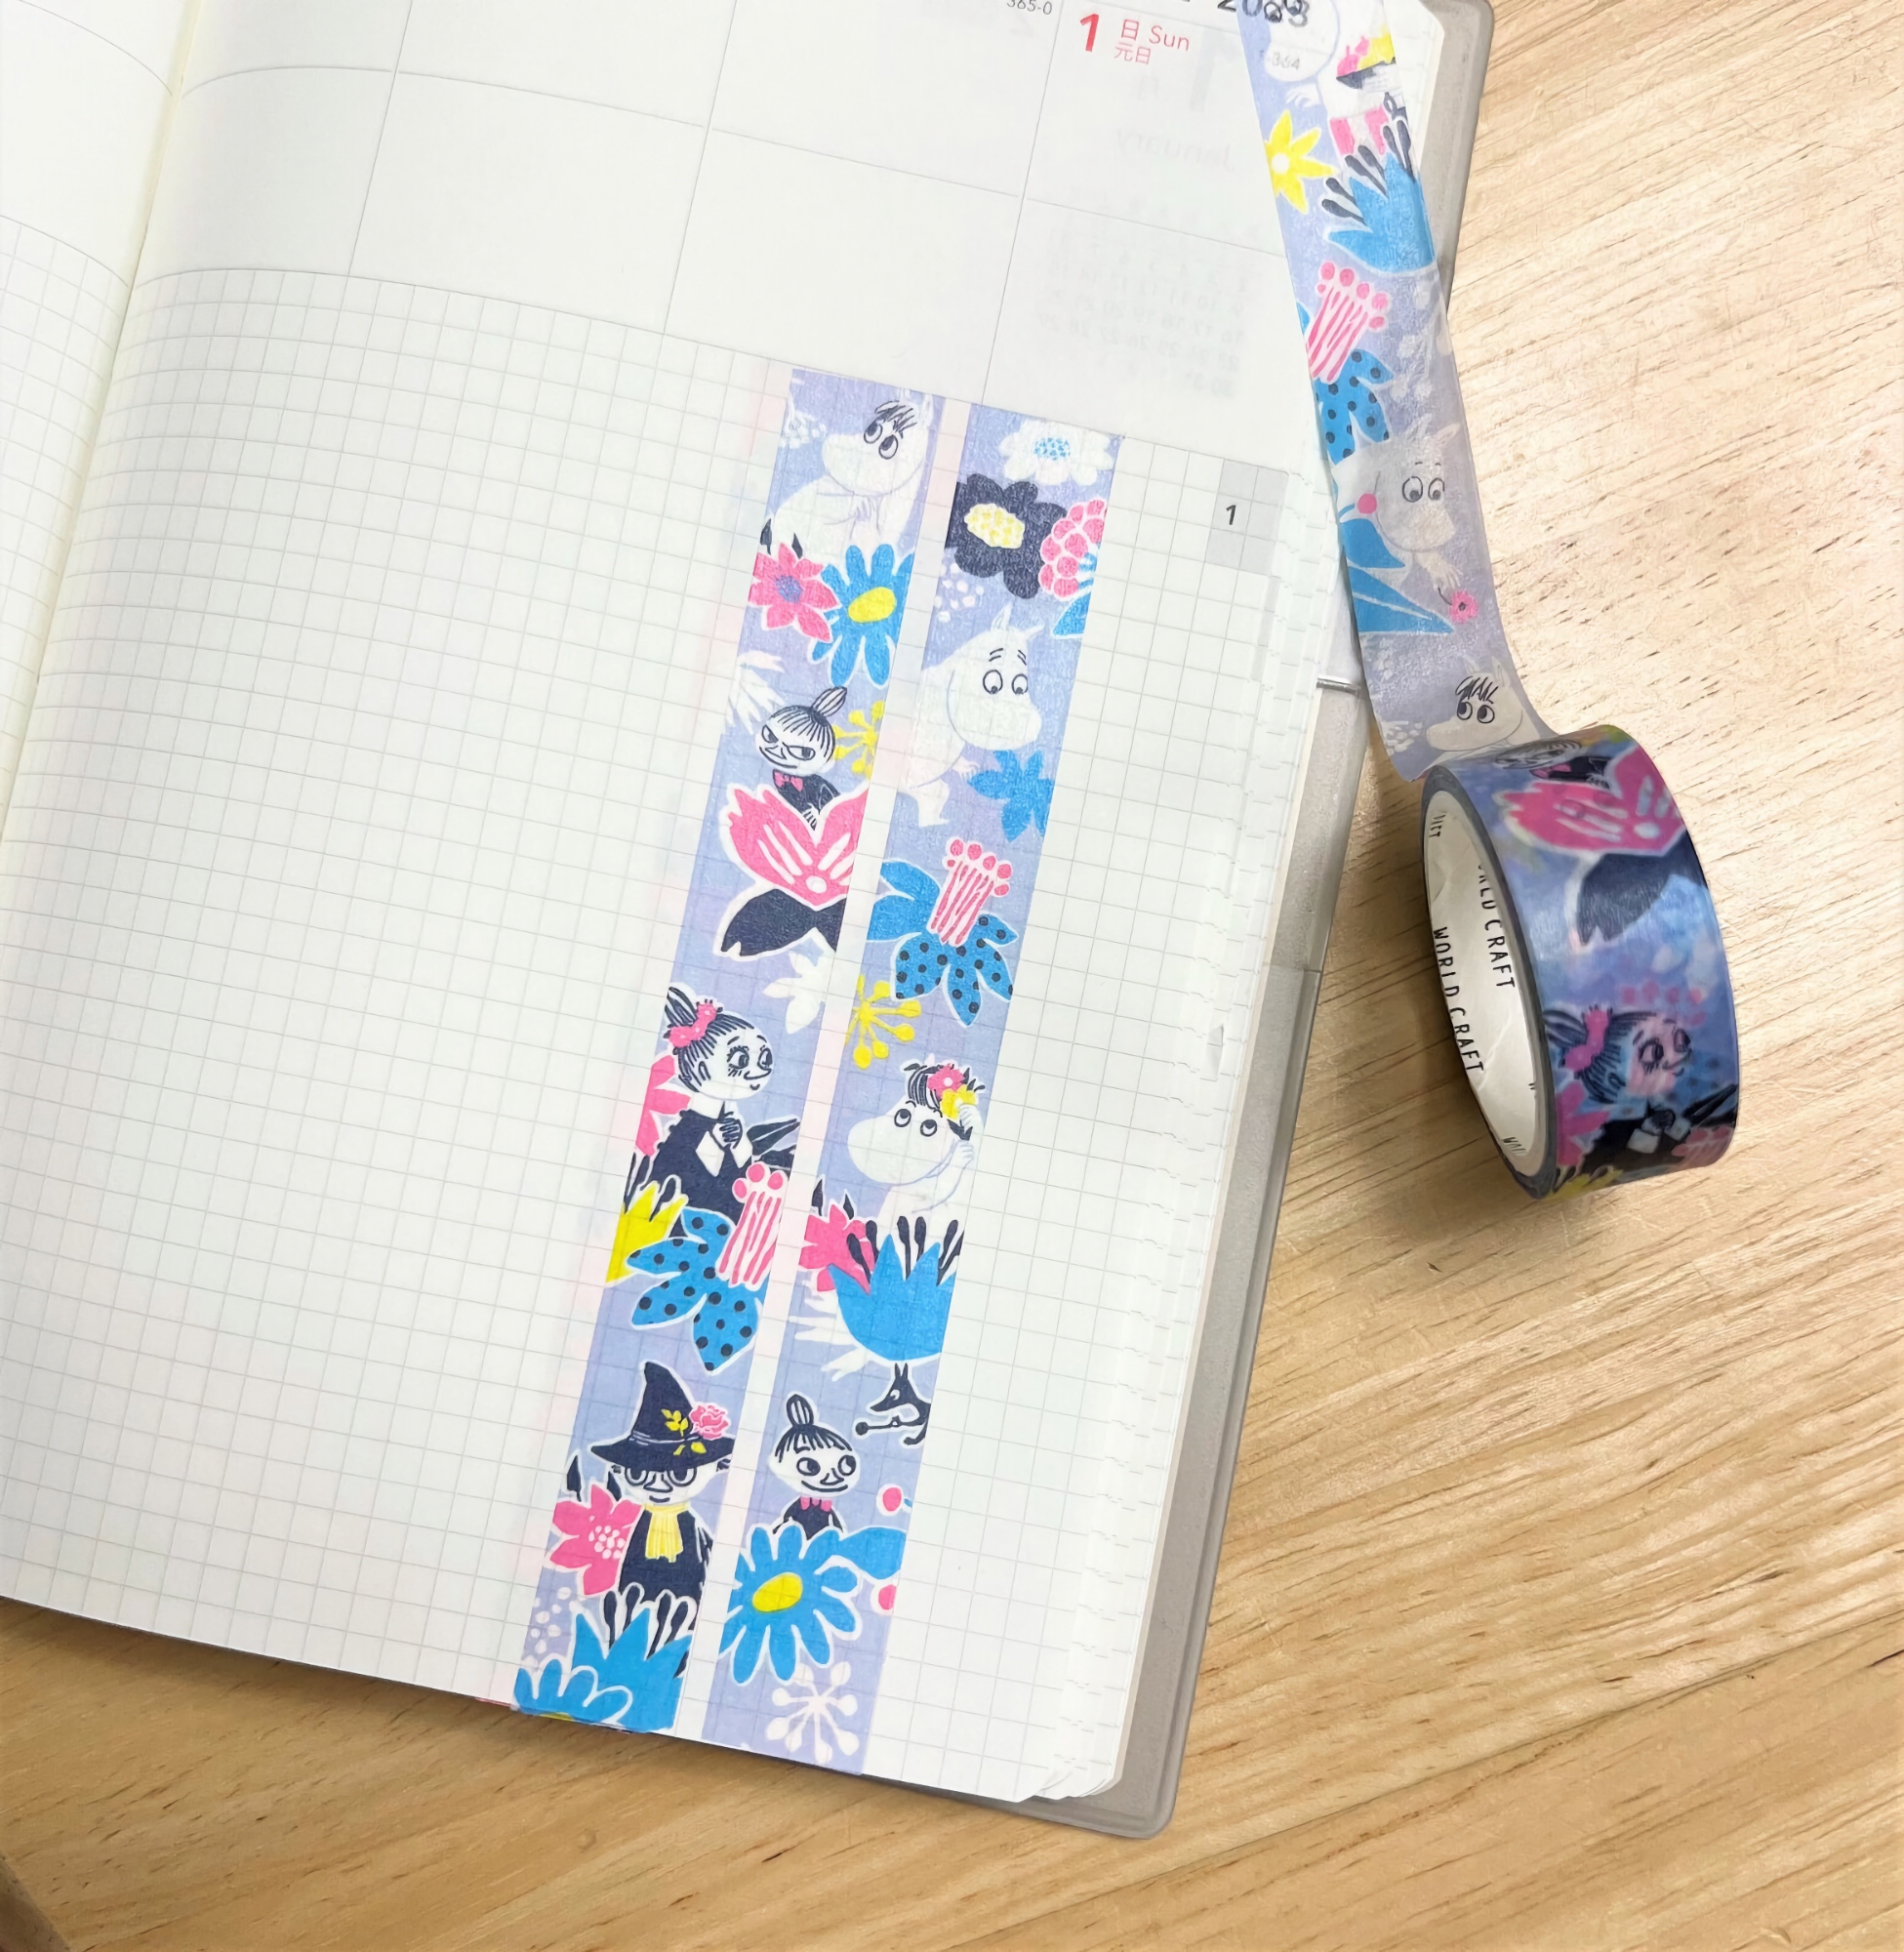 World Craft Washi Tape Moomin Flower Blue